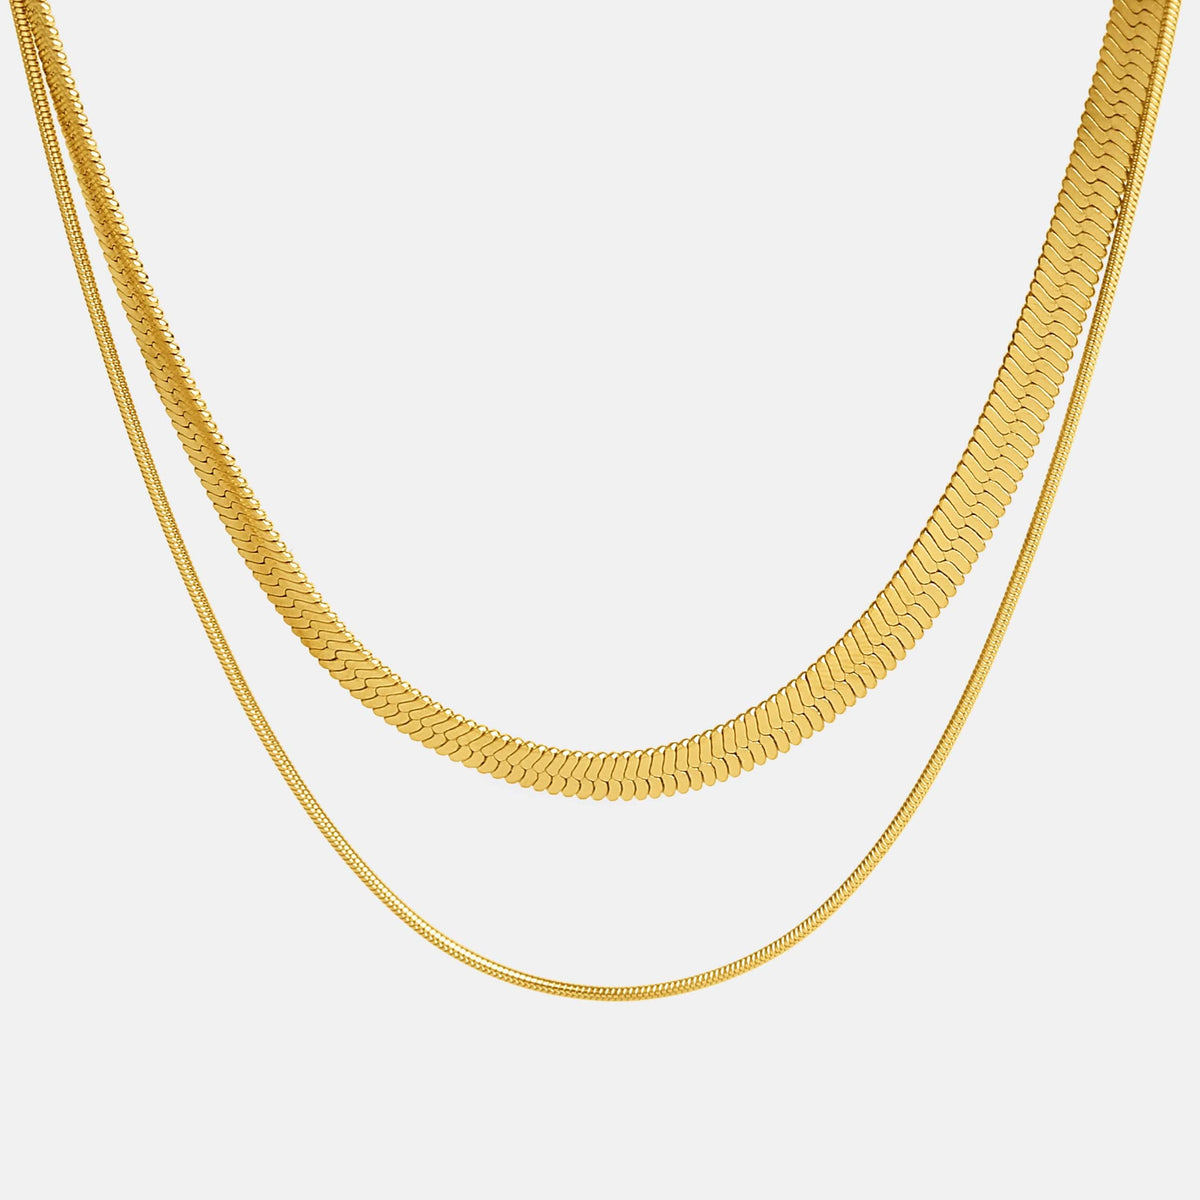 Vallerano necklace